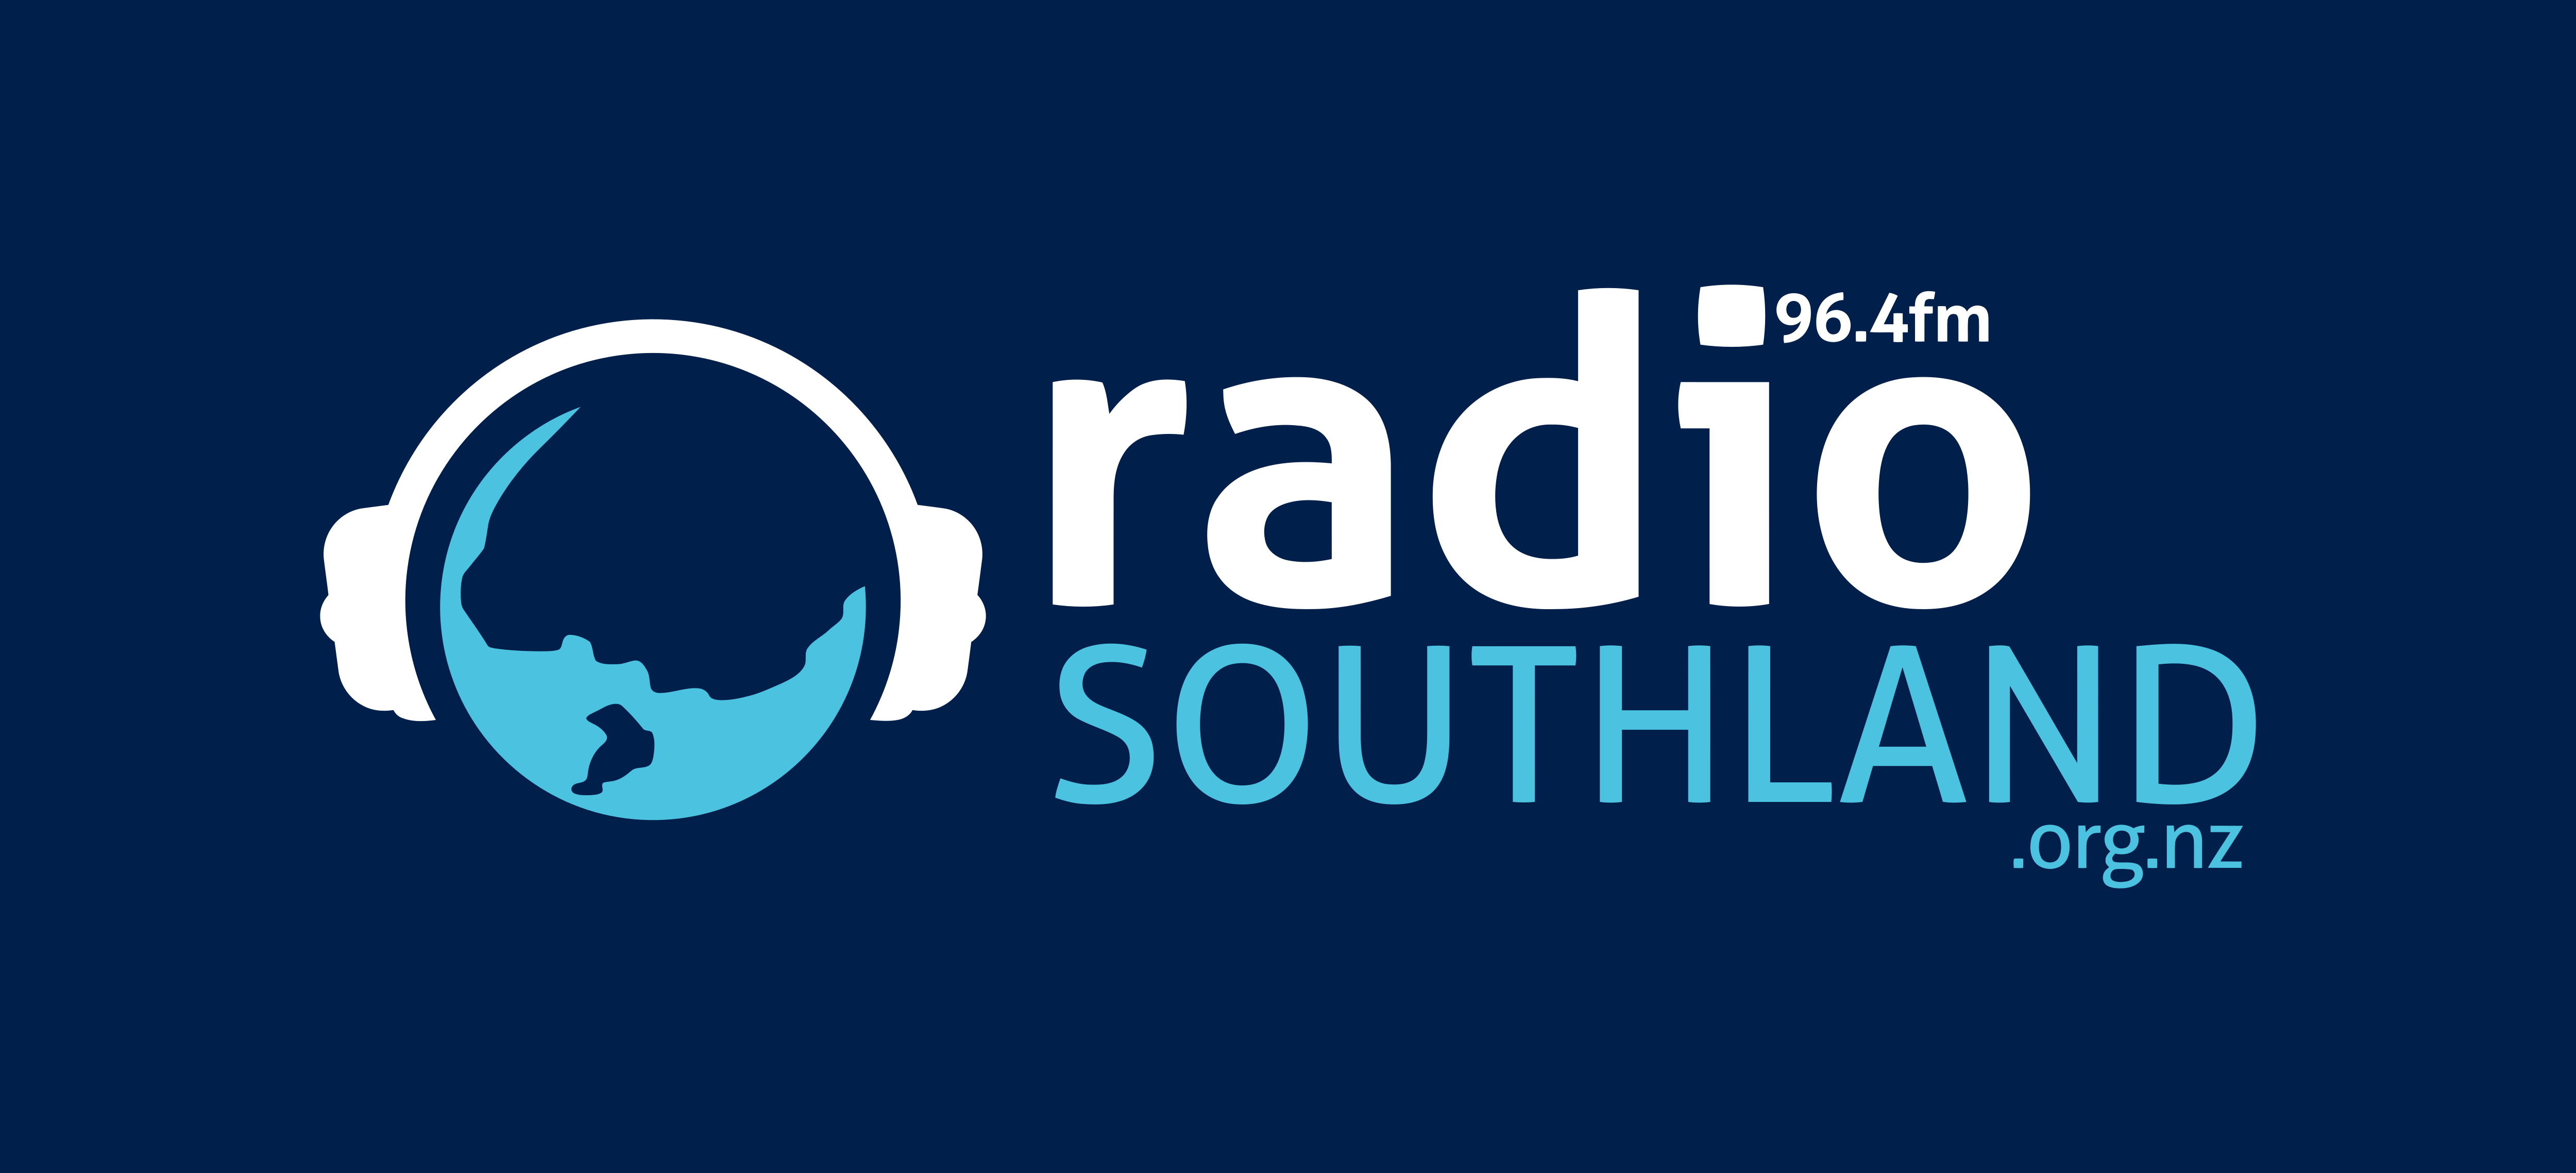 Radio Southland – Logos Download